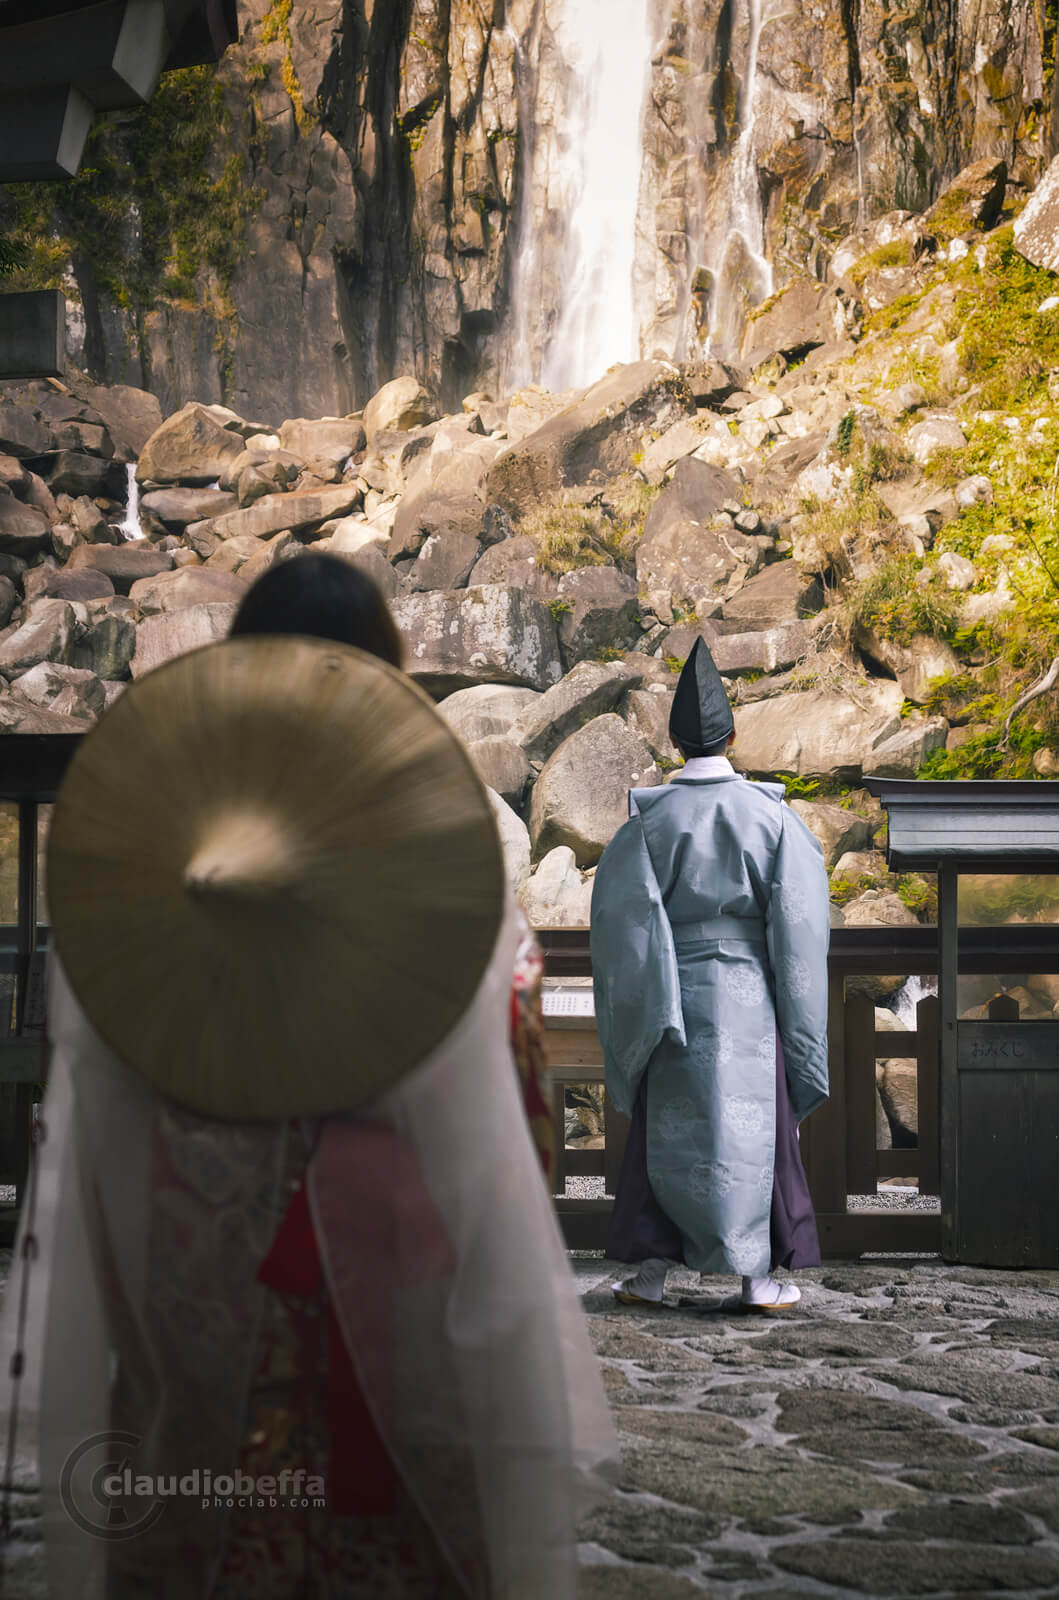 Tourists, Pilgrims, Kimono, Heian, Nachi no Taki, Waterfall, Hirou Shrine, Hiryu Gongen, Nature, Culture, Kii peninsula, Kumano, Japan